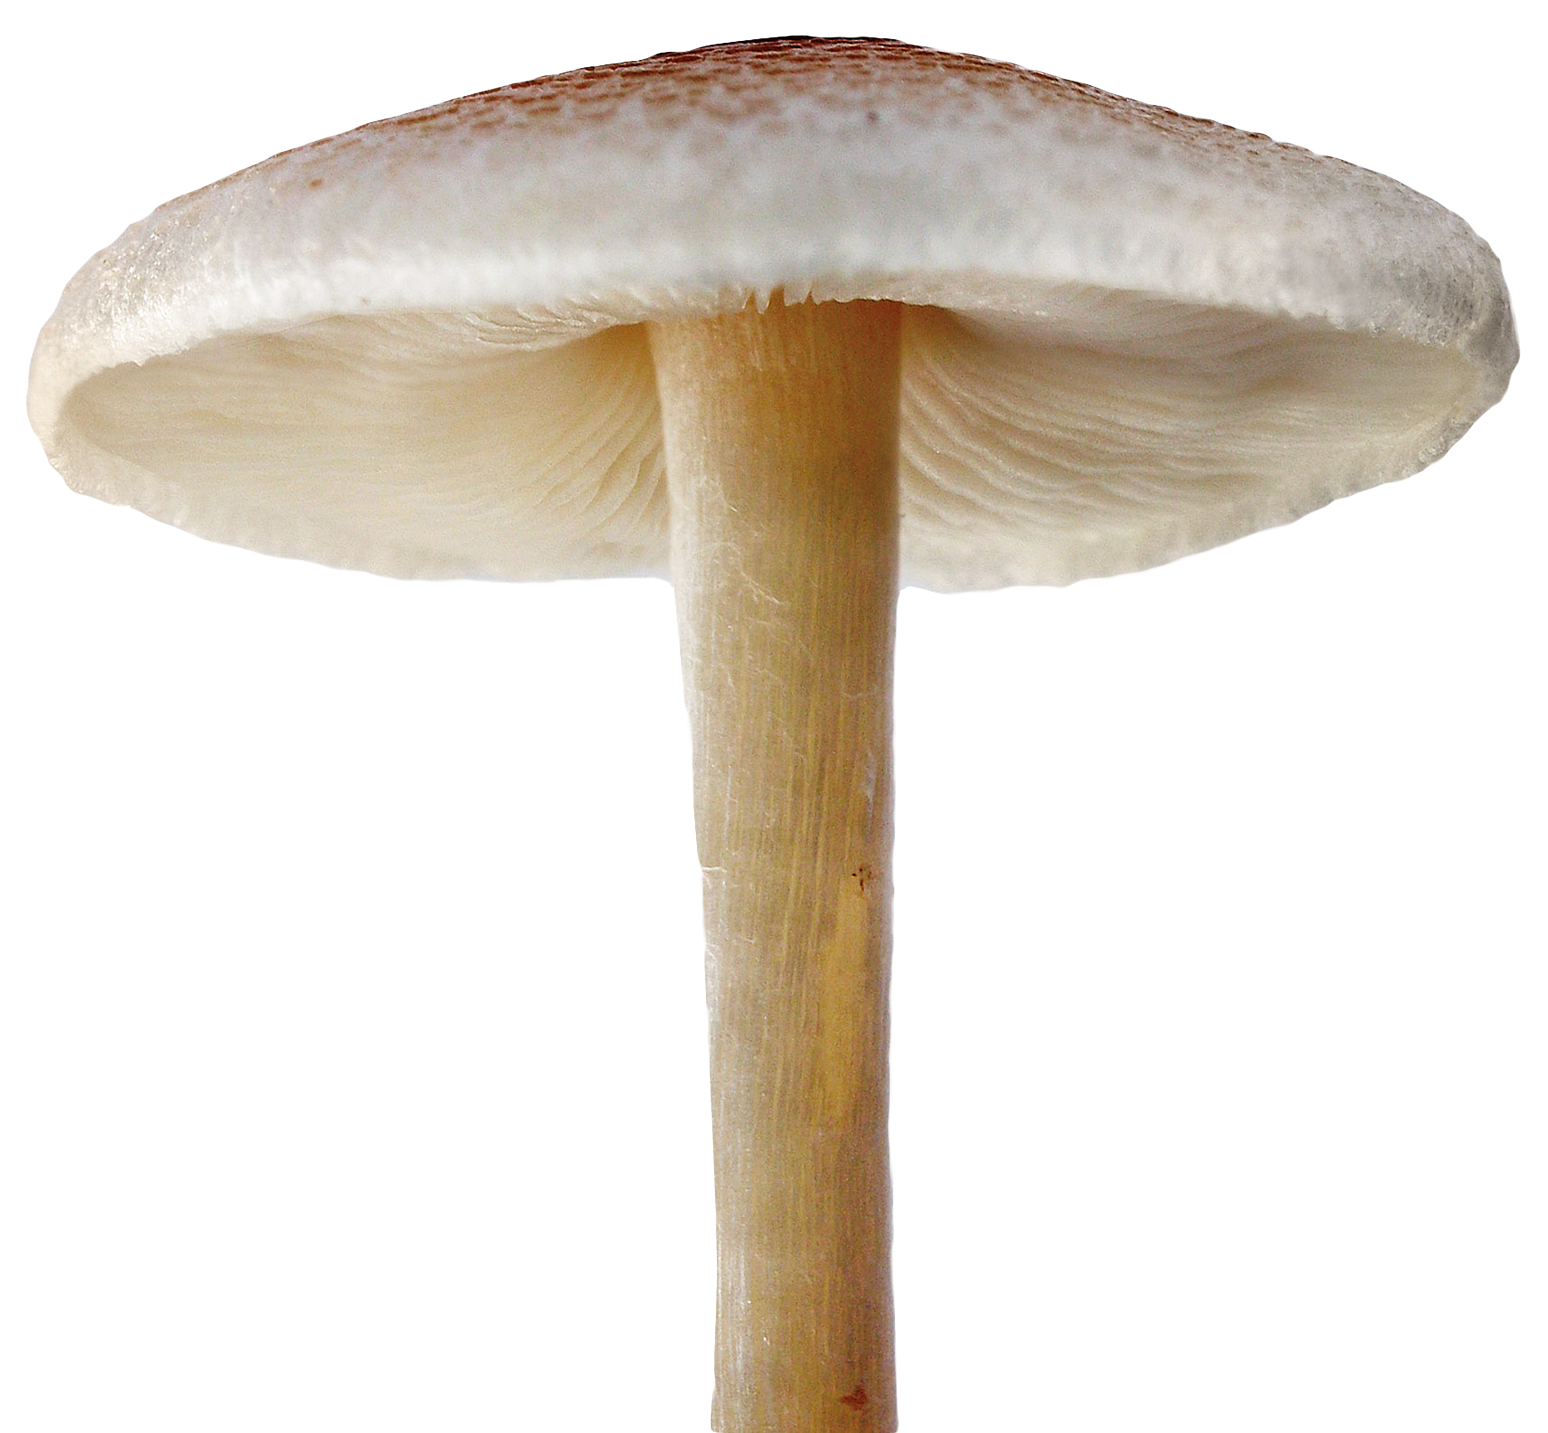 Mushroom Png File - Mushroom, Transparent background PNG HD thumbnail